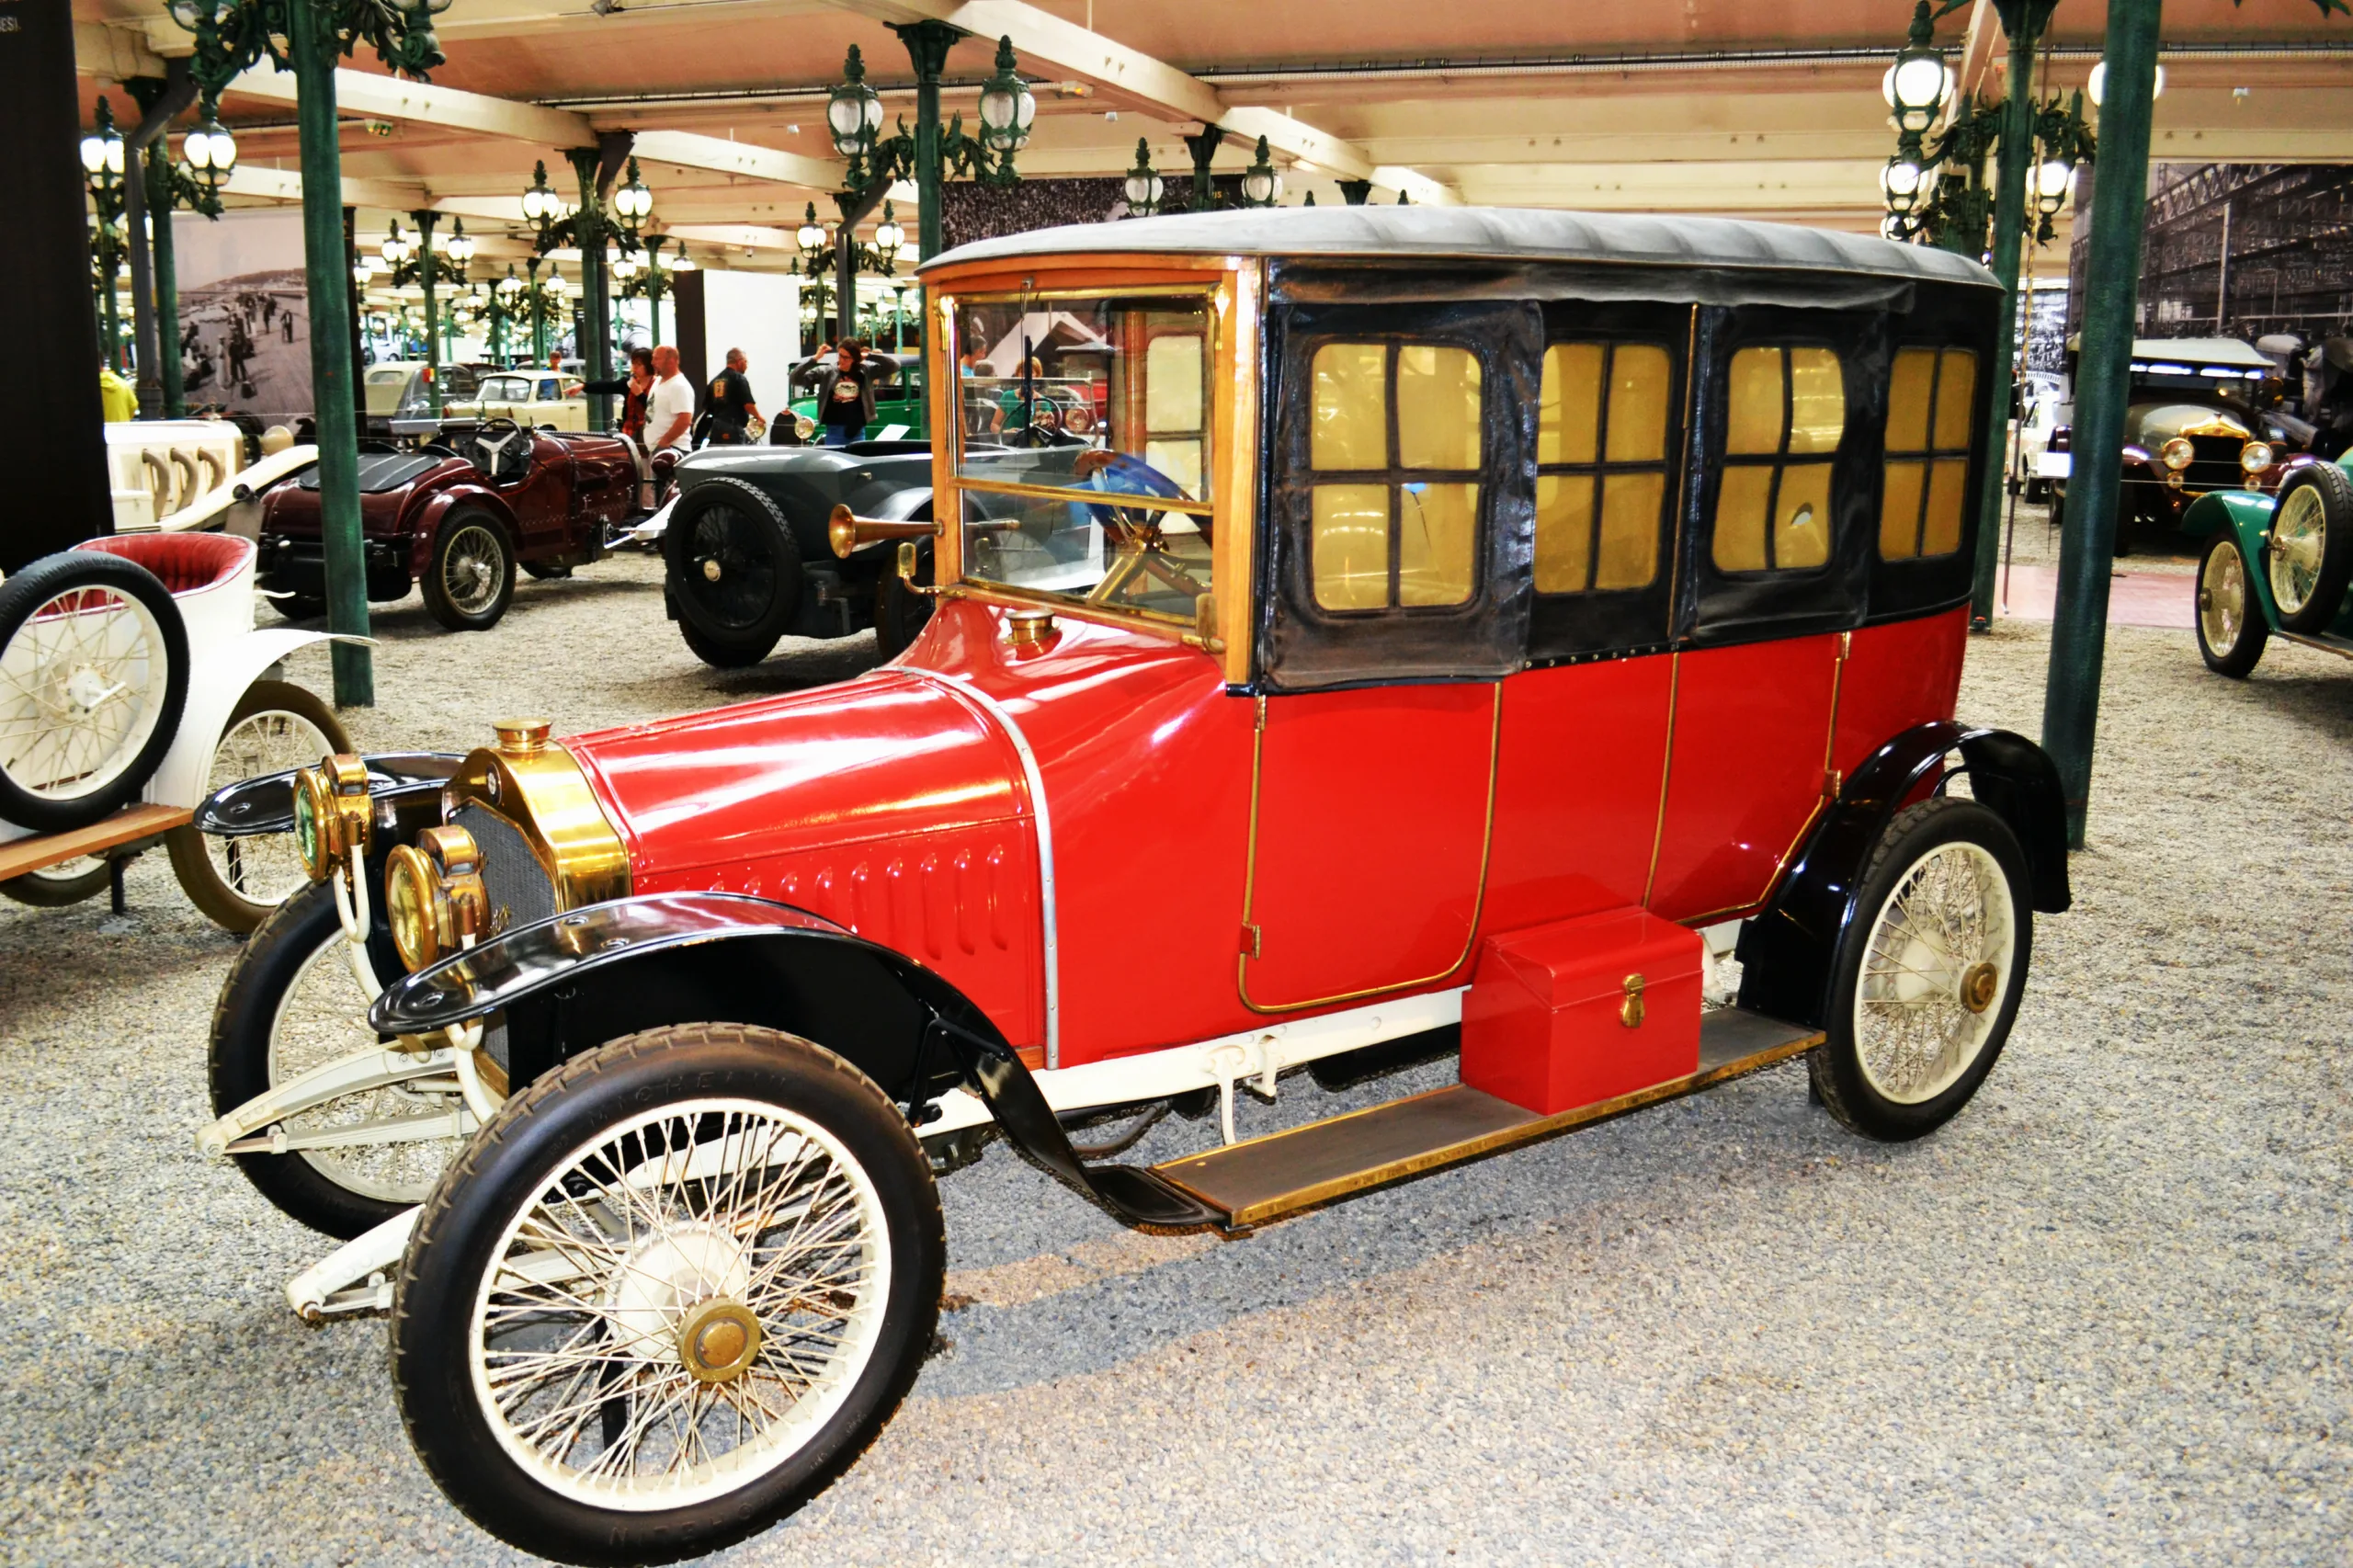 Cite de l’ Automobile, Μουσείο αυτοκινήτου στην Αλσατία 141